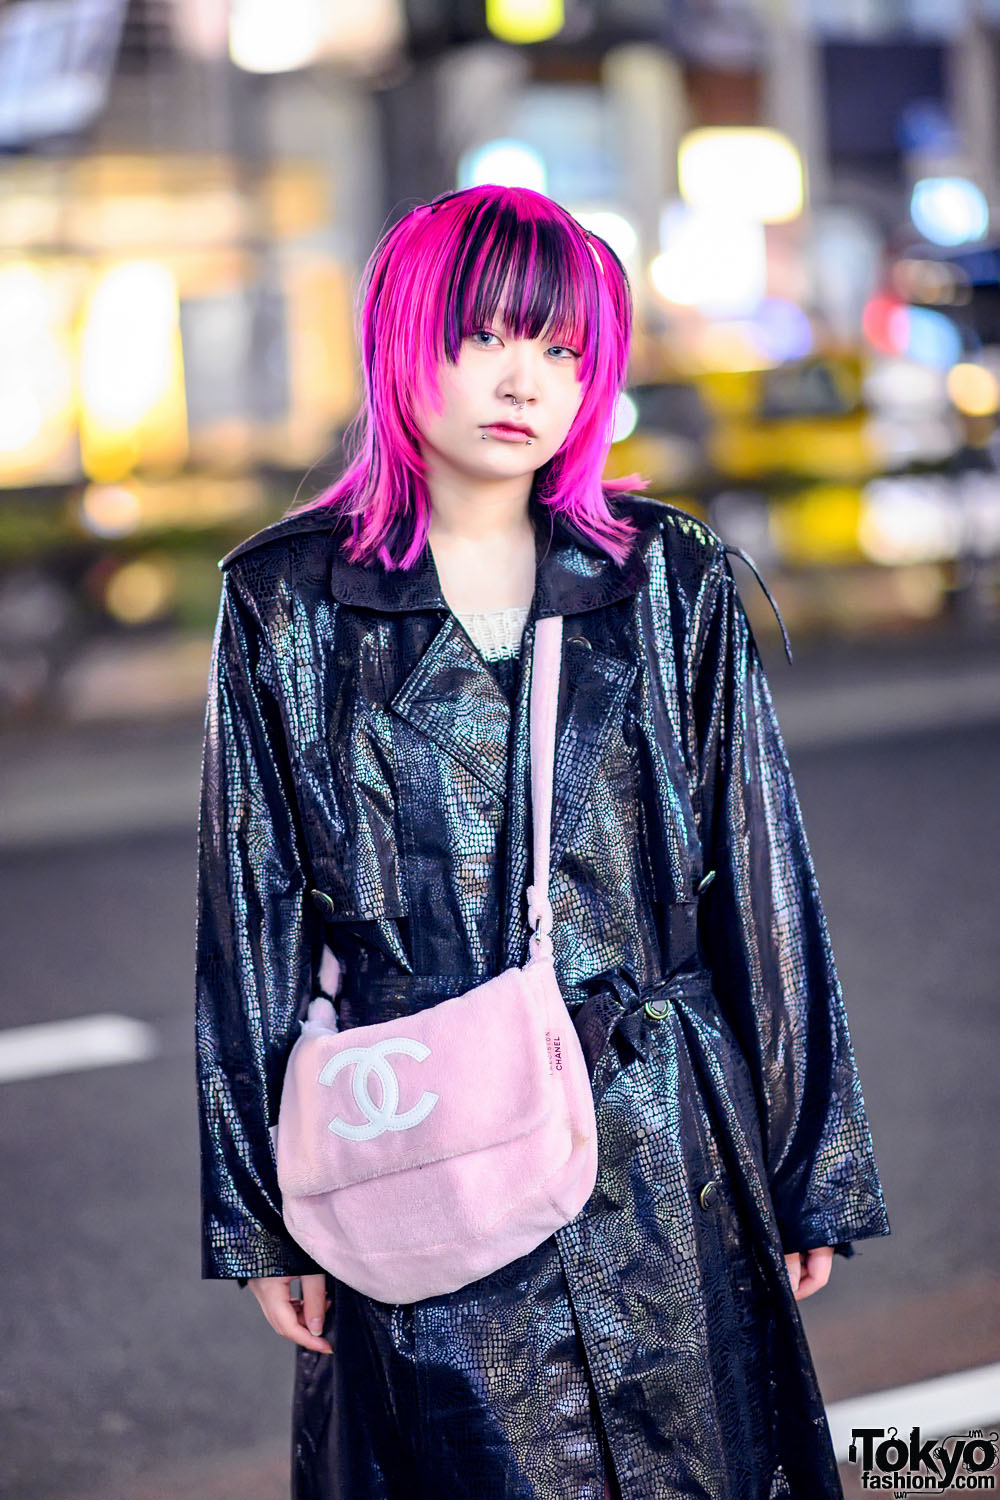 Harajuku Girl w/ Pink Streaked Hairstyle, Chanel Plush Bag, Leg Warmers &  Spiked Crocs – Tokyo Fashion